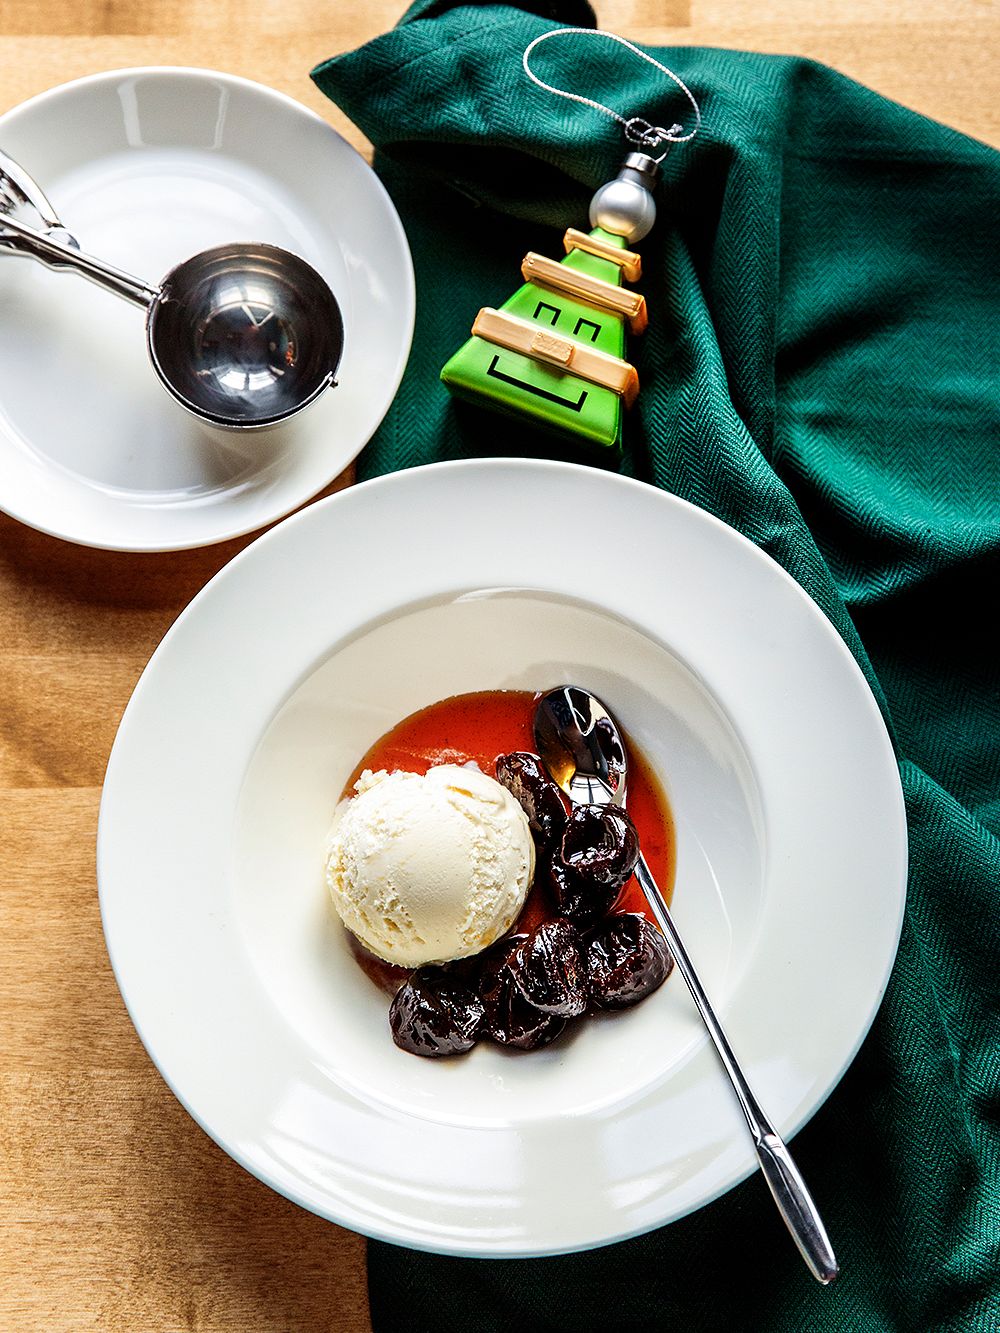 Festive desserts: Rum plums and vanilla ice cream on Arabia's KoKo plate